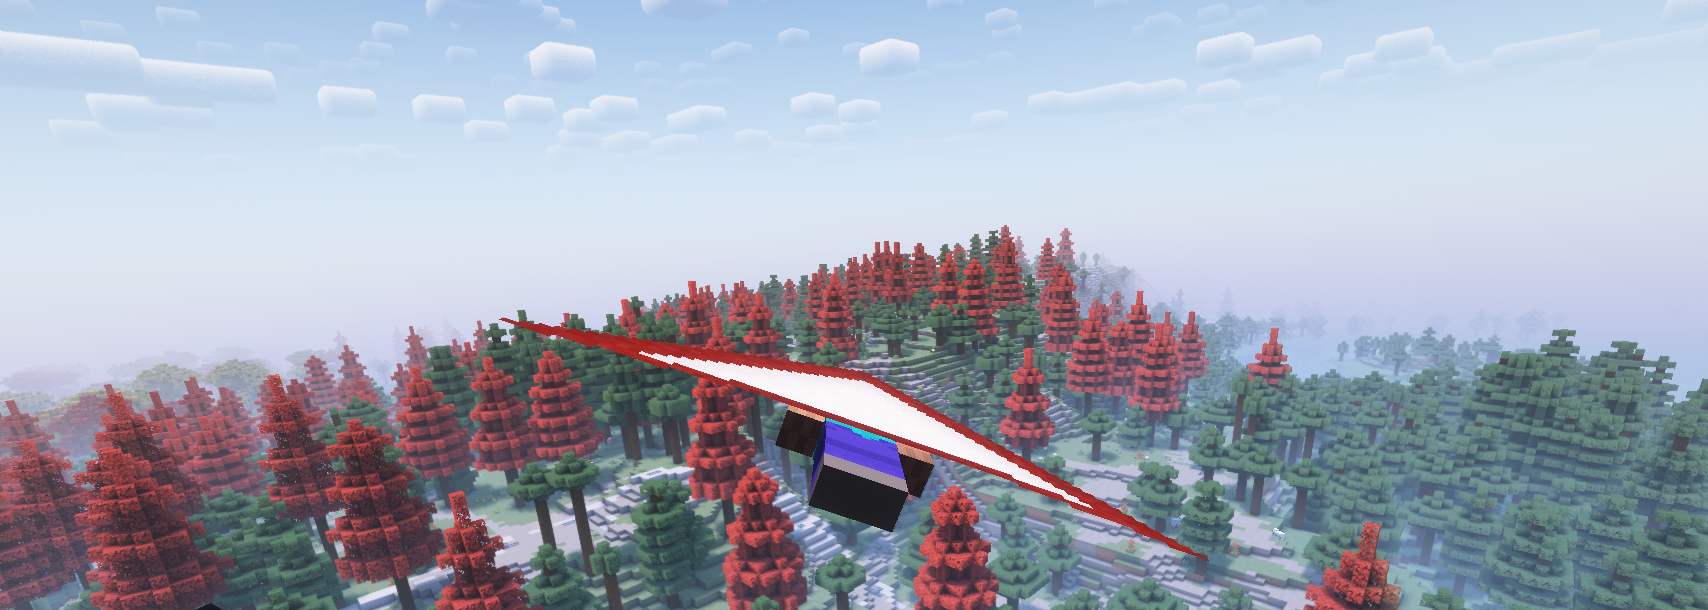 Hang Glider screenshot 2